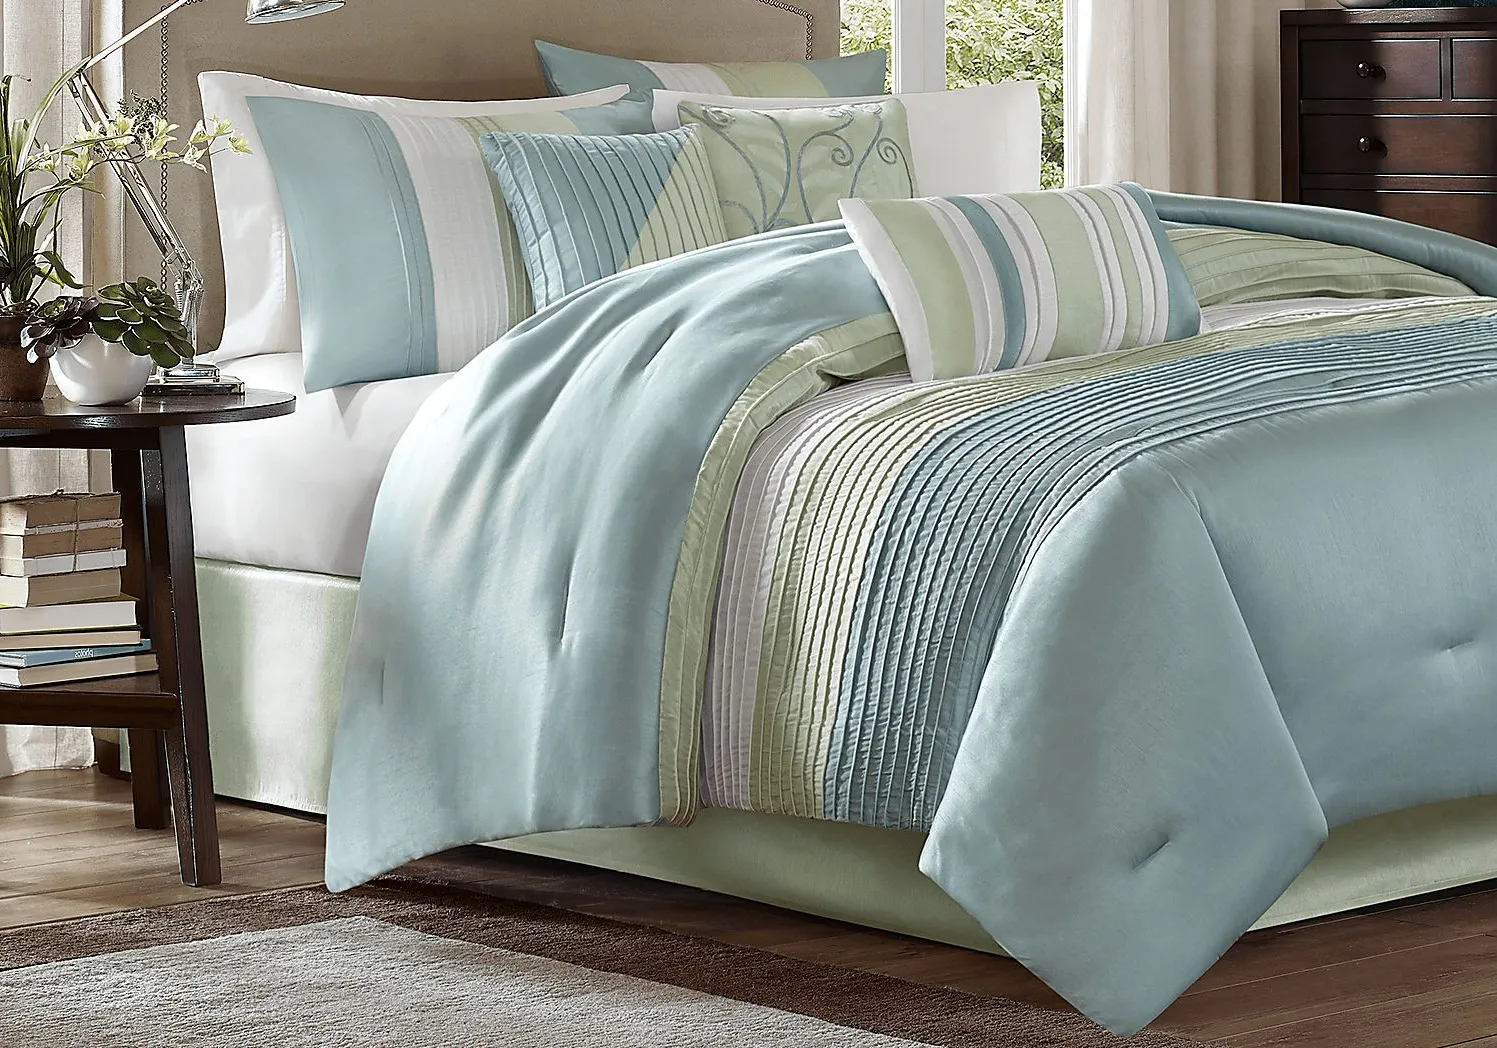 Brenna Blue/Green 7 Pc King Comforter Set